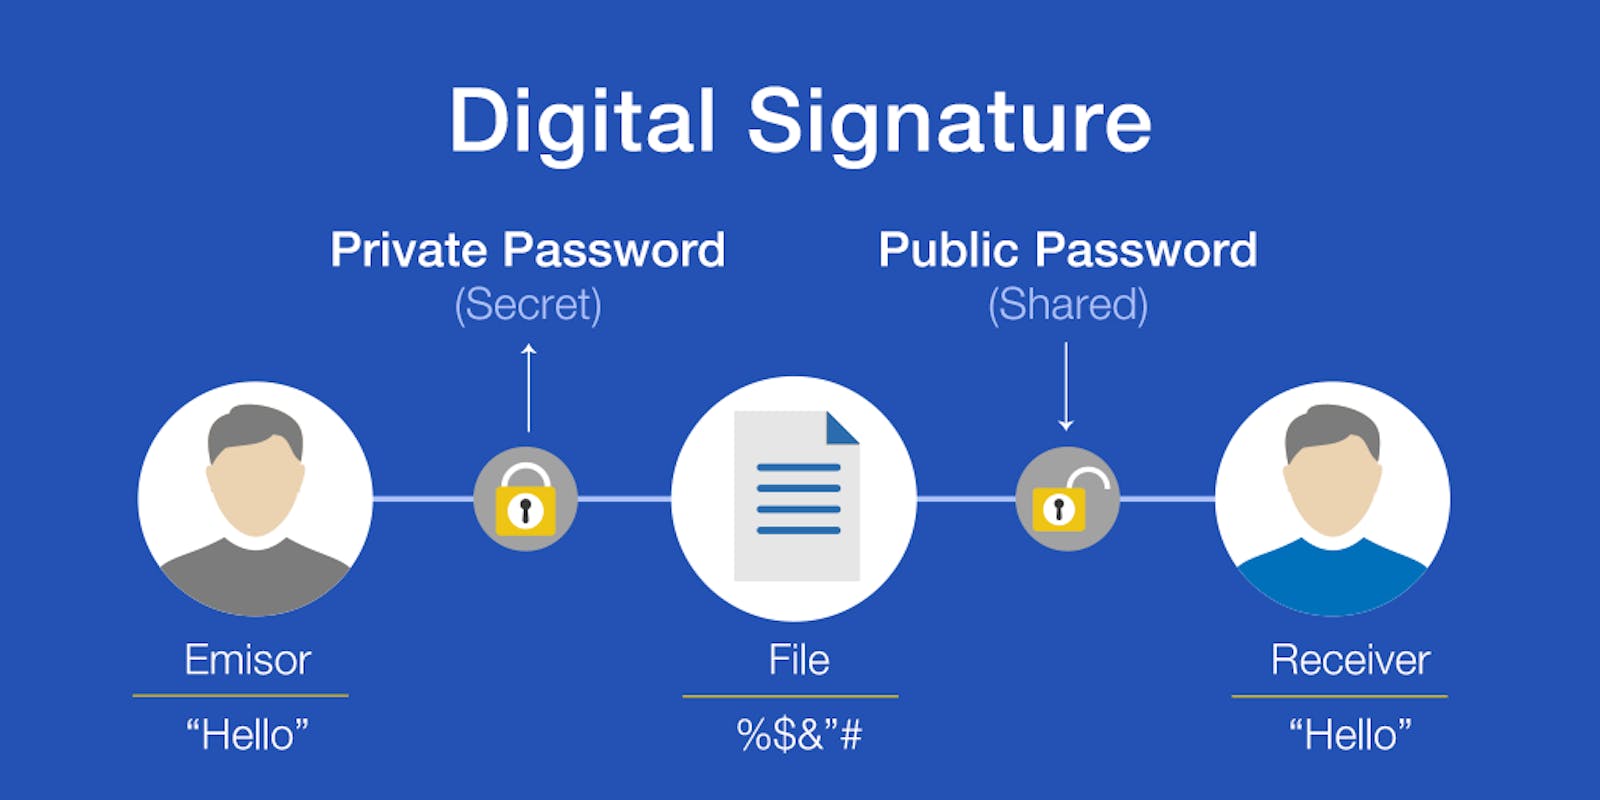 Digital Signatures 101: Understanding the Basics